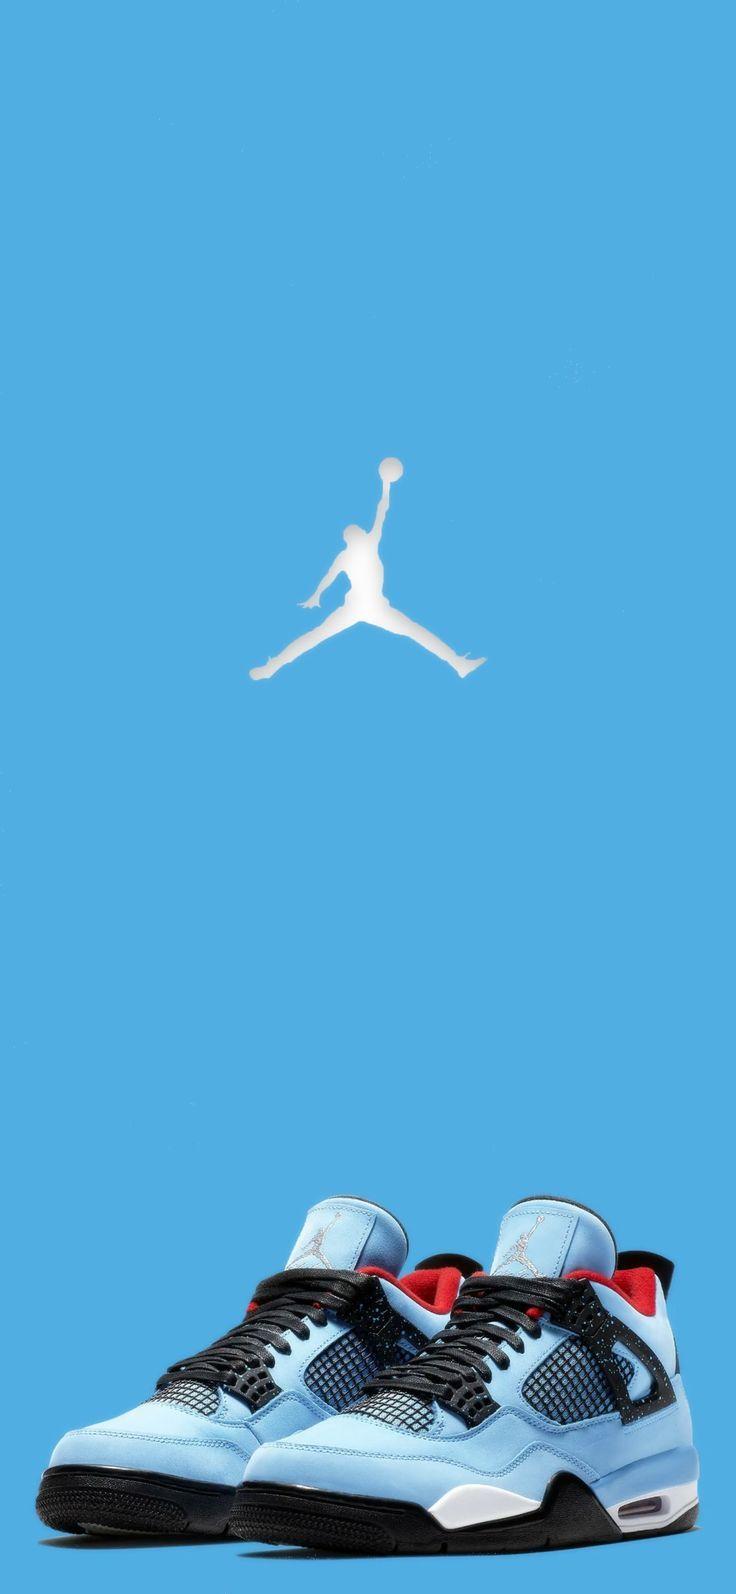 Click Hot Jordan Sneaker Air Outfit Logo